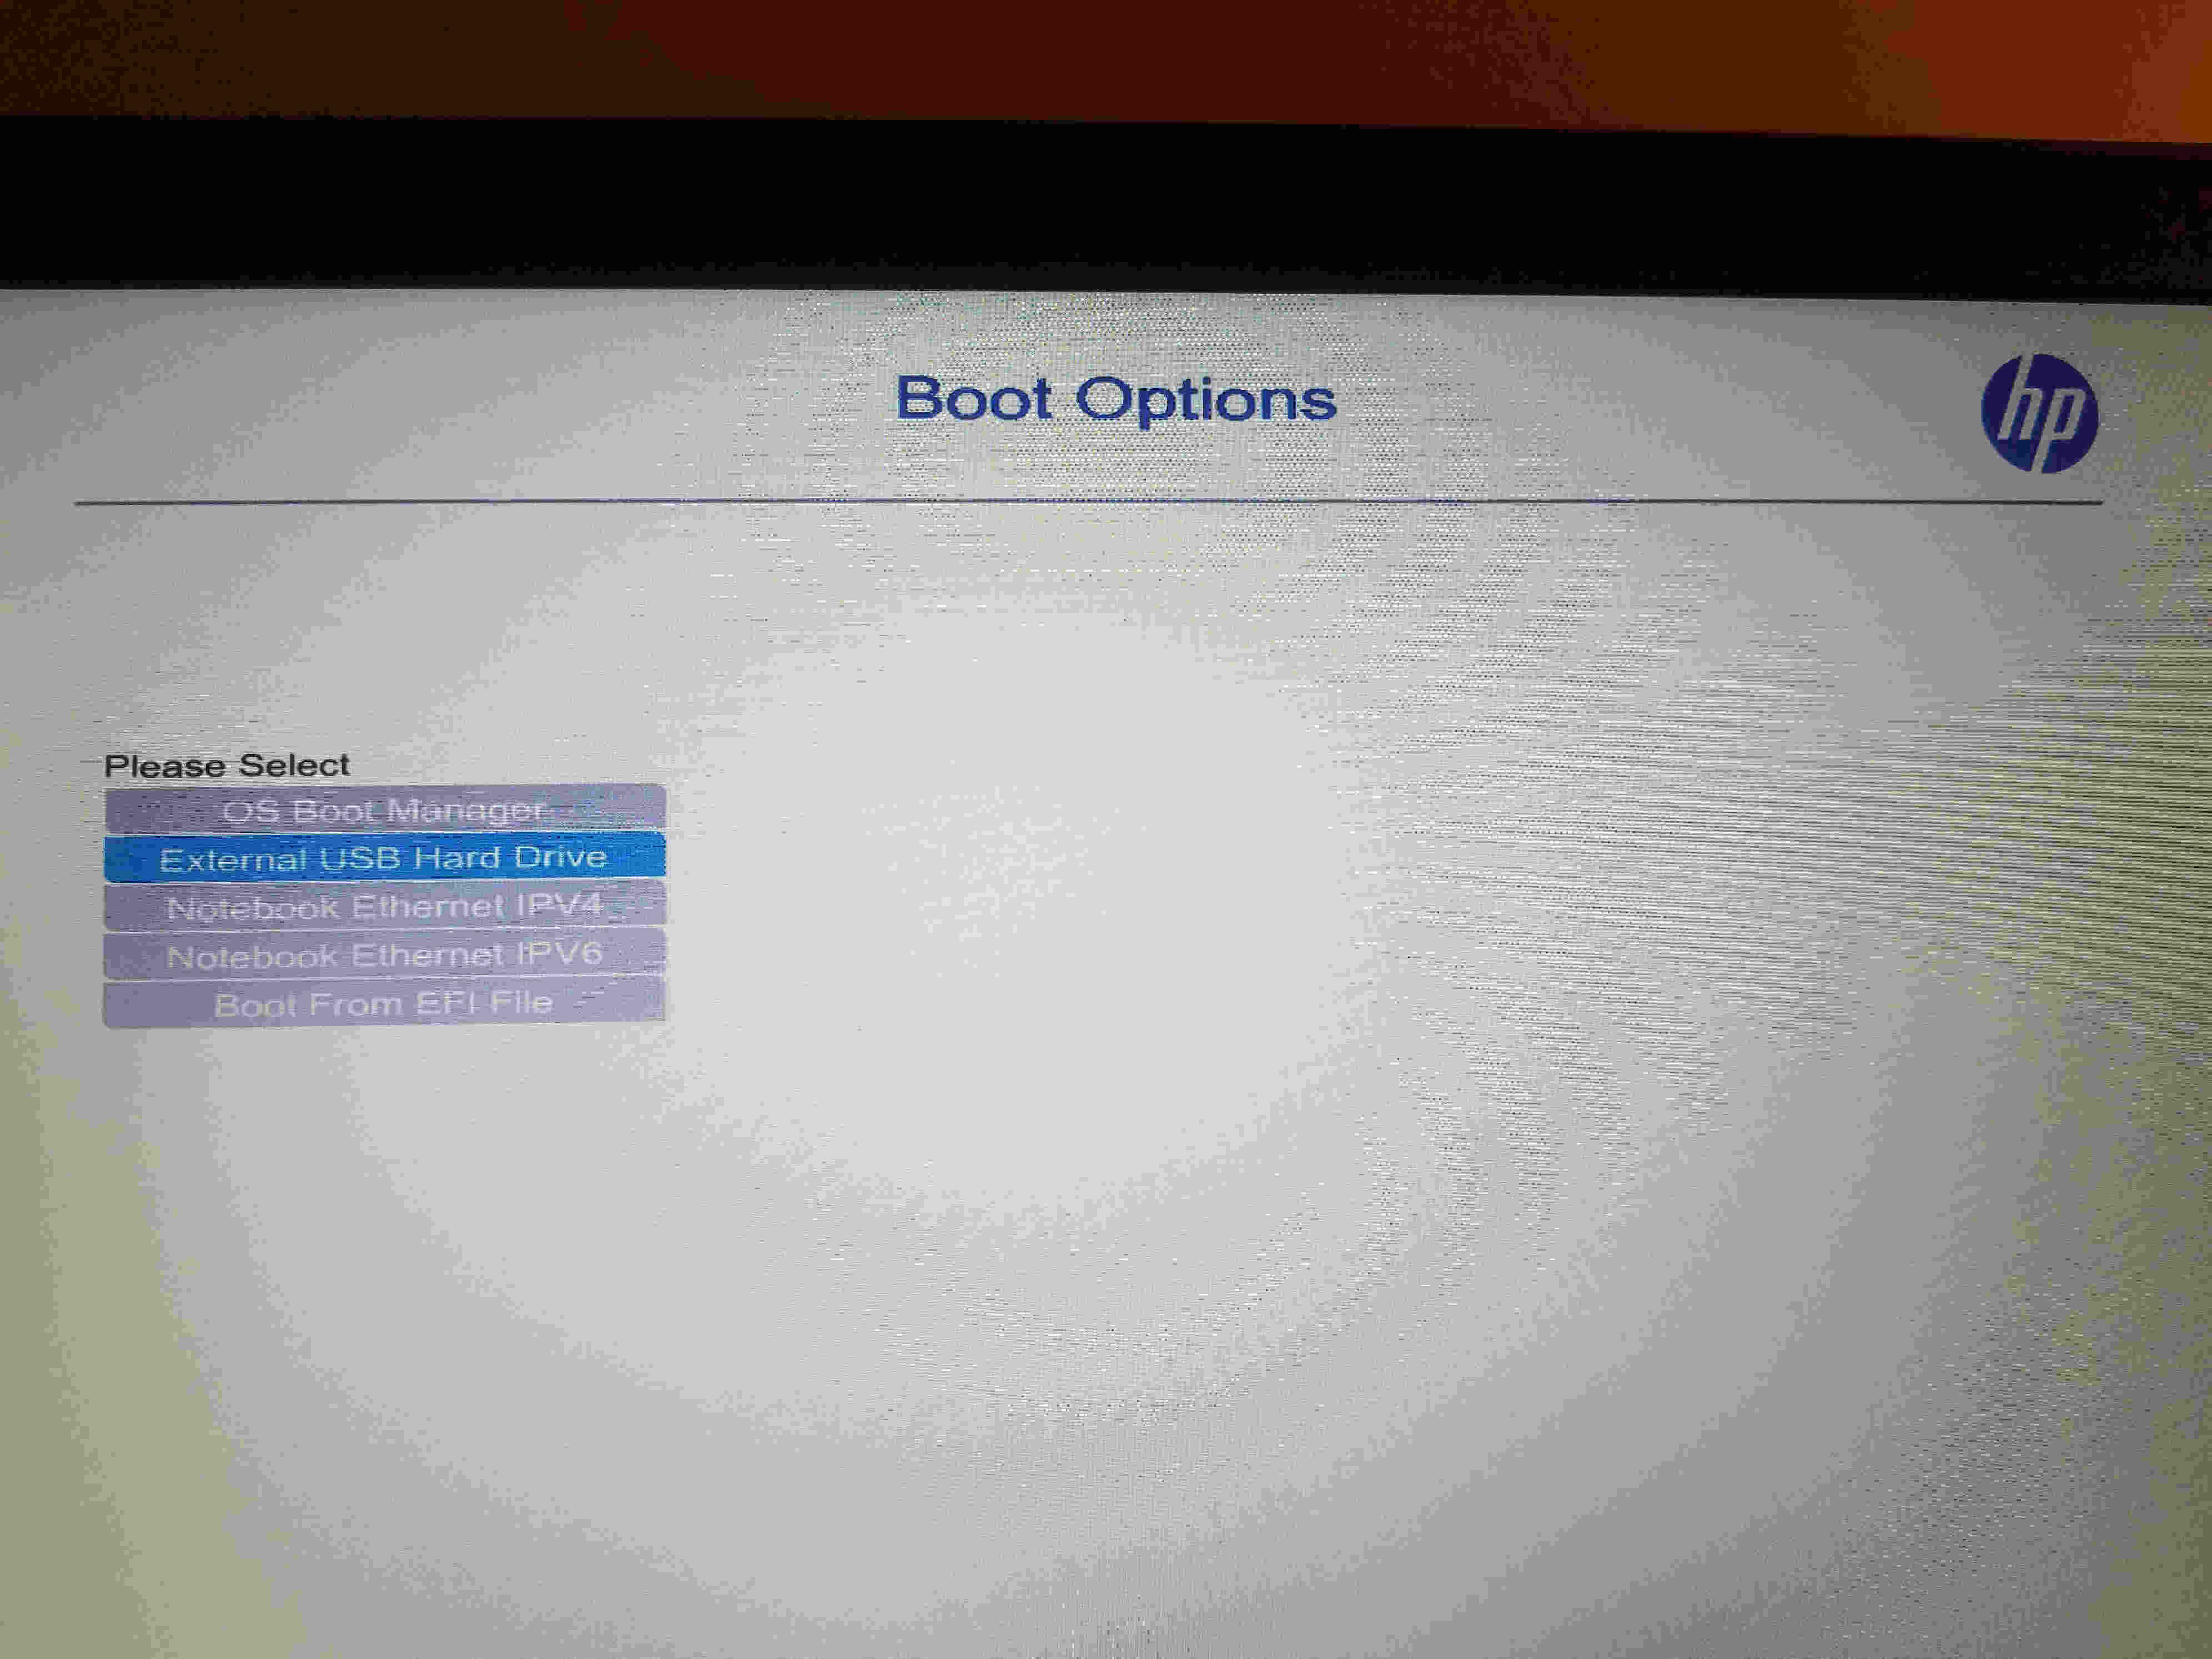 HP, boot options.jpg